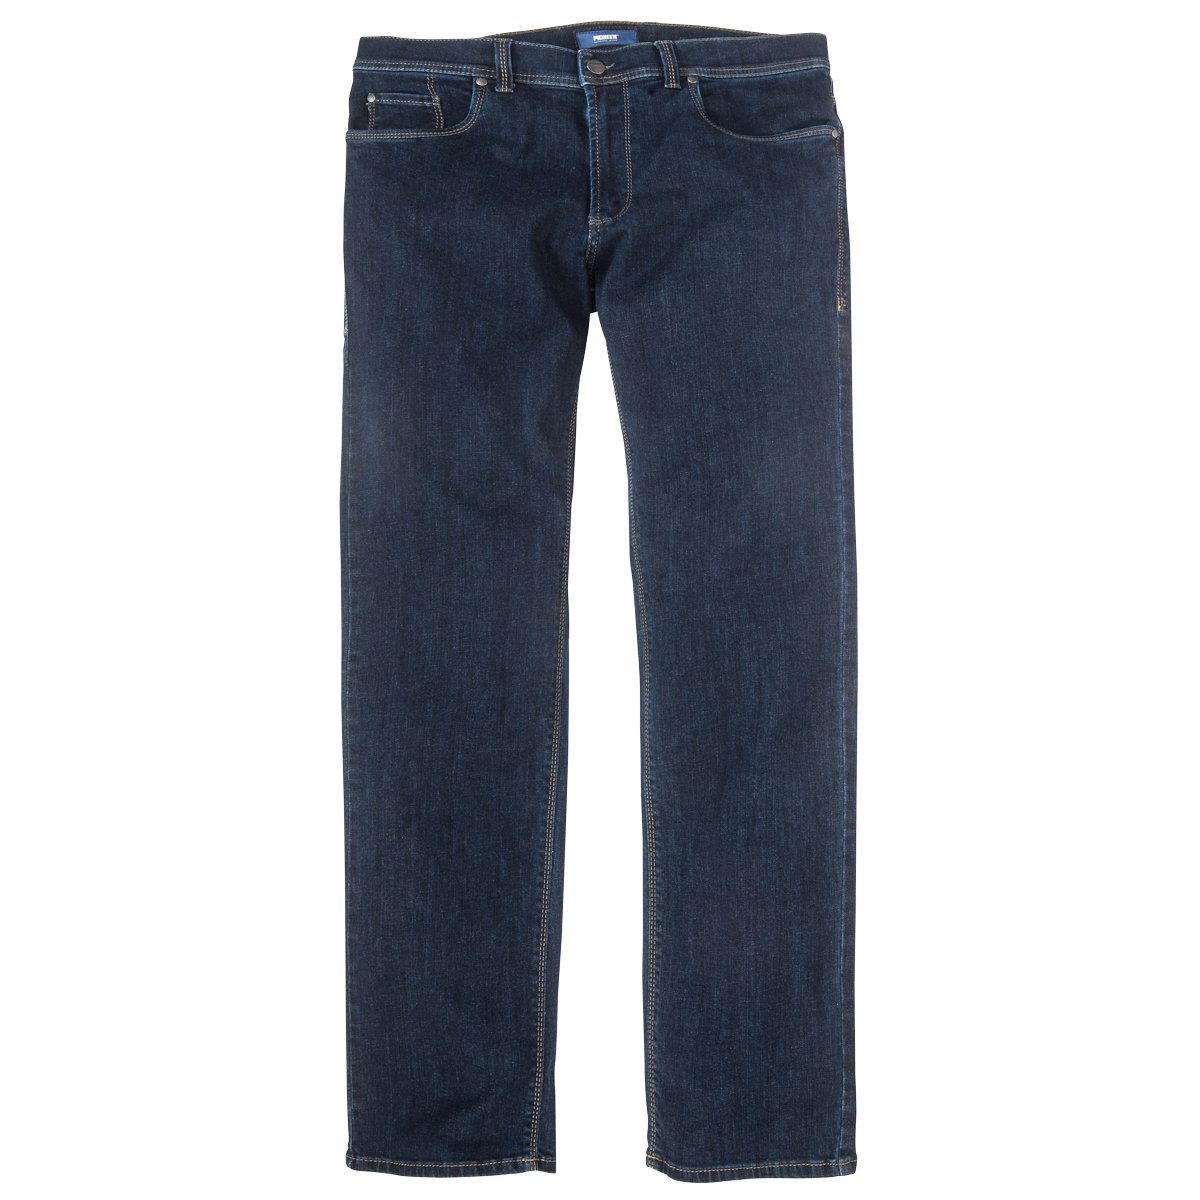 Pionier Stretch-Jeans Große Größen Stretch-Jeans dark stone blue Thomas Pioneer | Stretchjeans